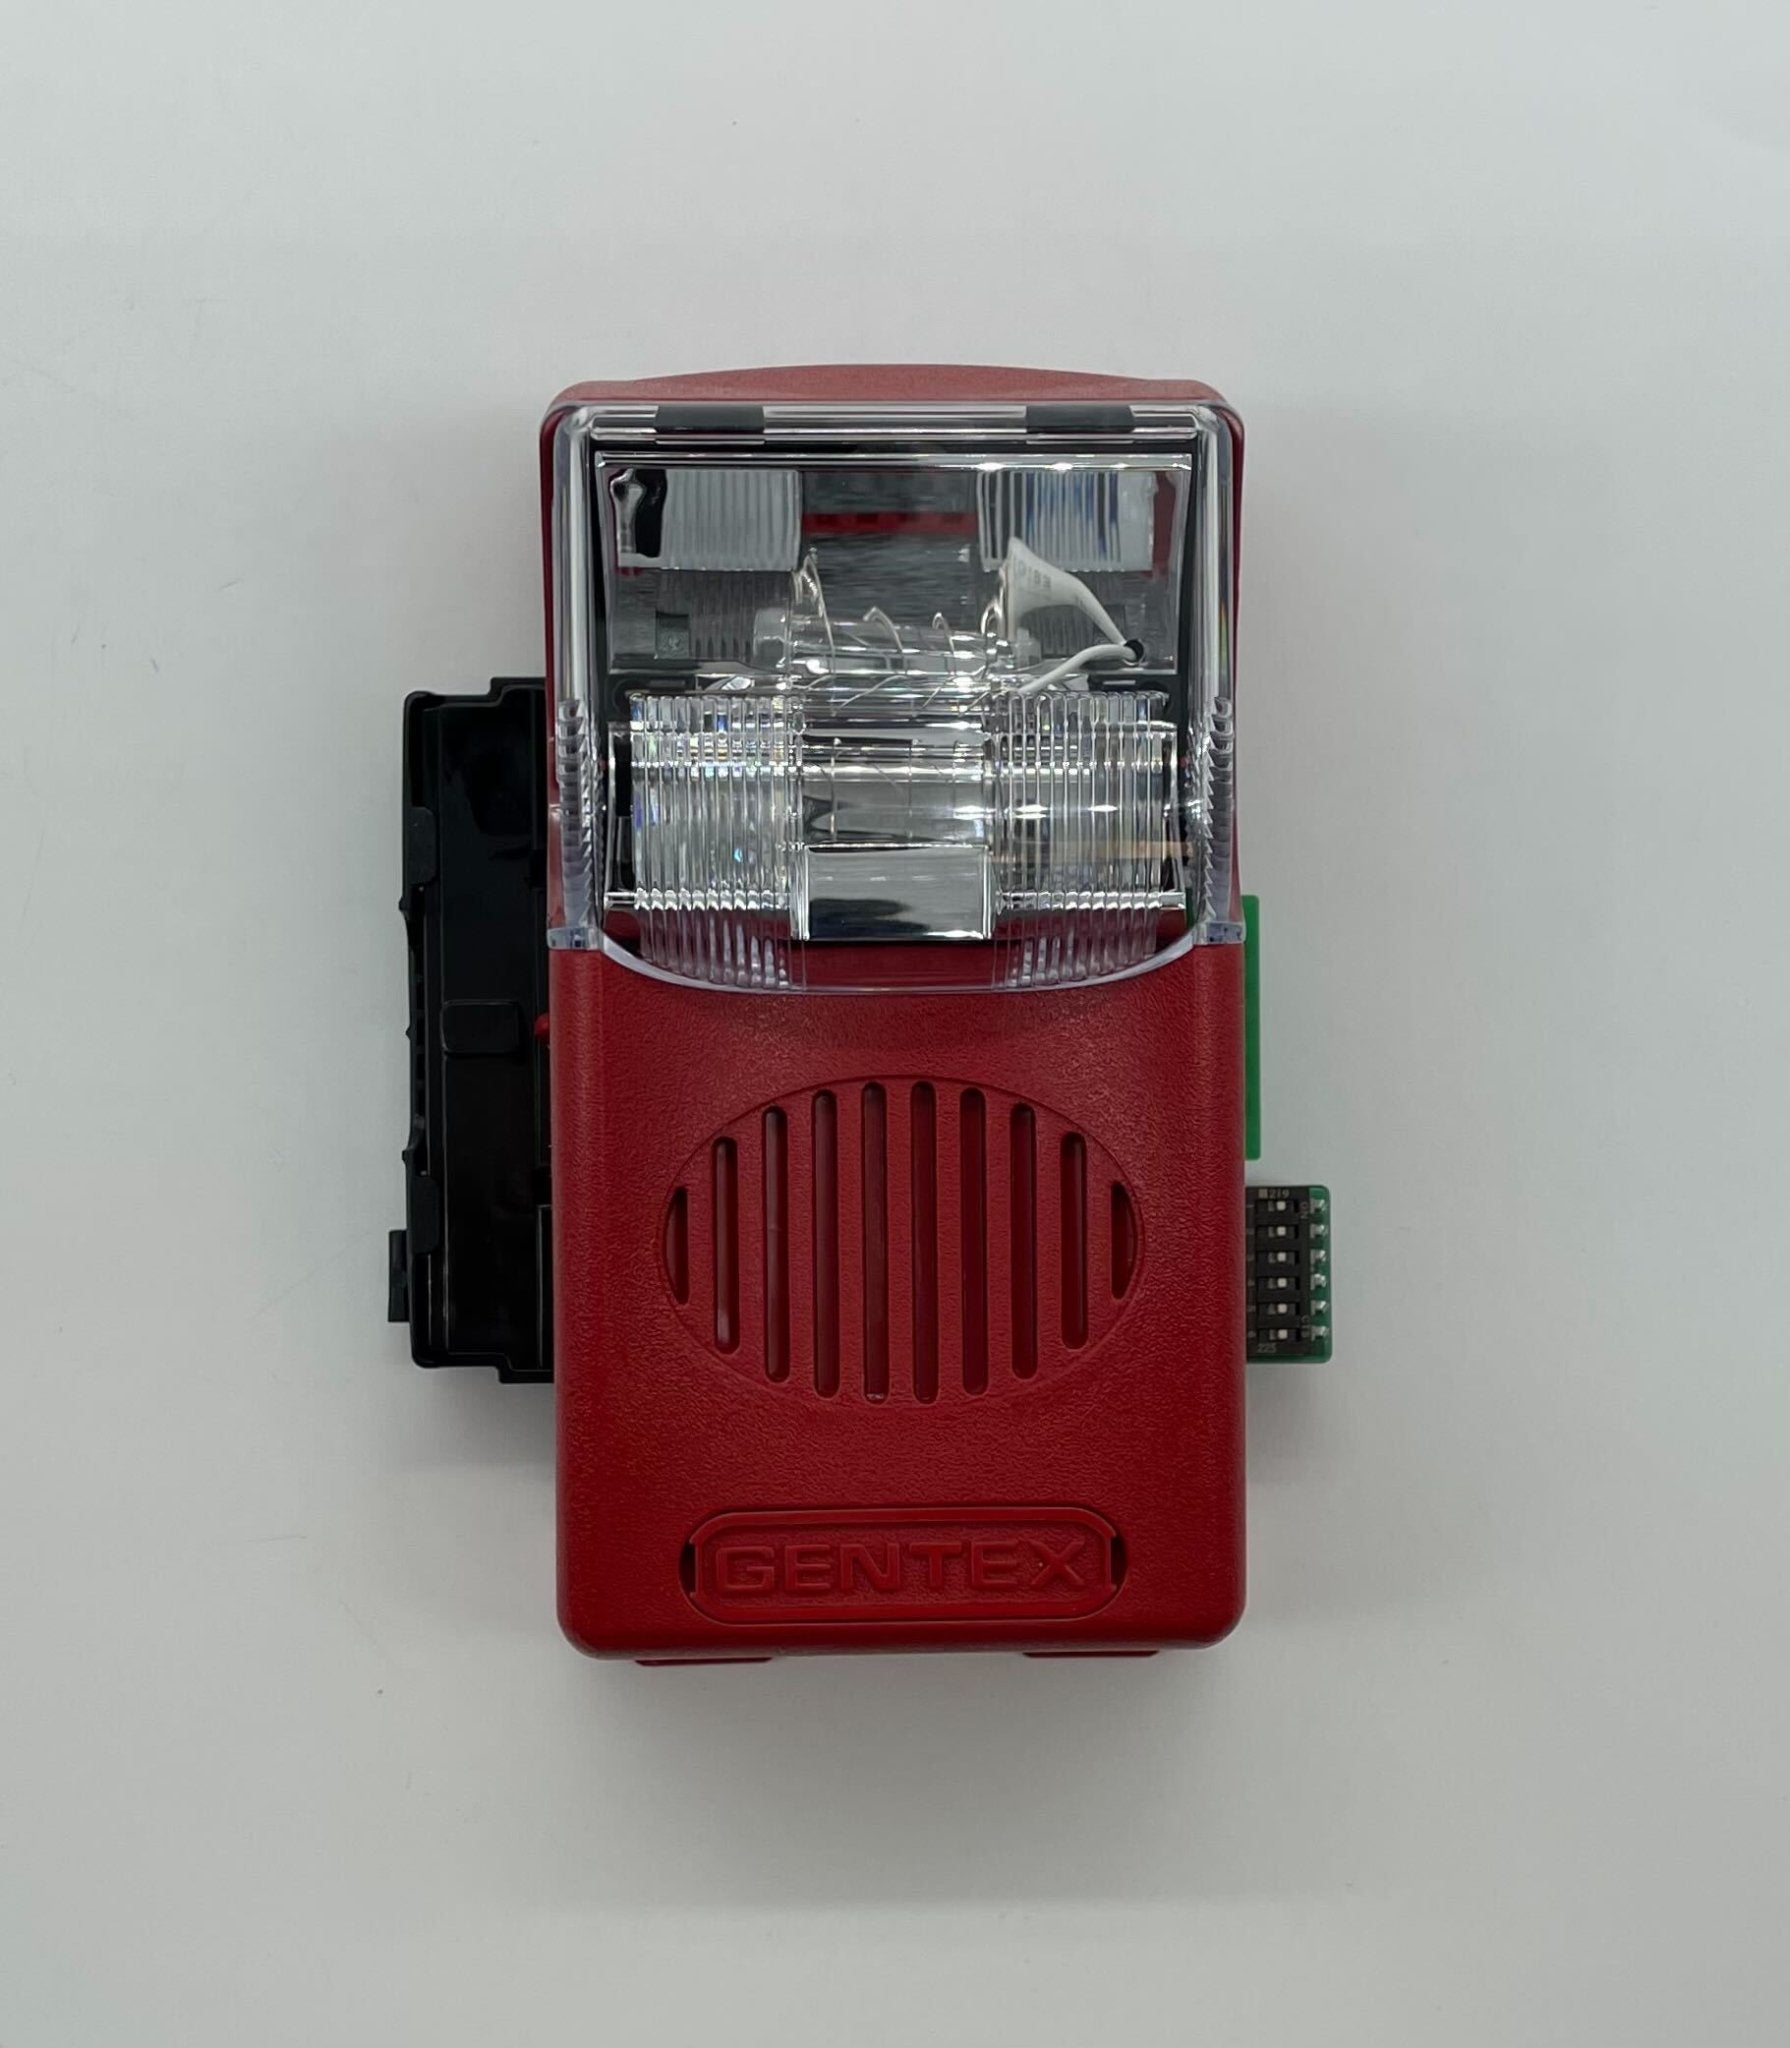 Gentex WGEC24-75WR - The Fire Alarm Supplier